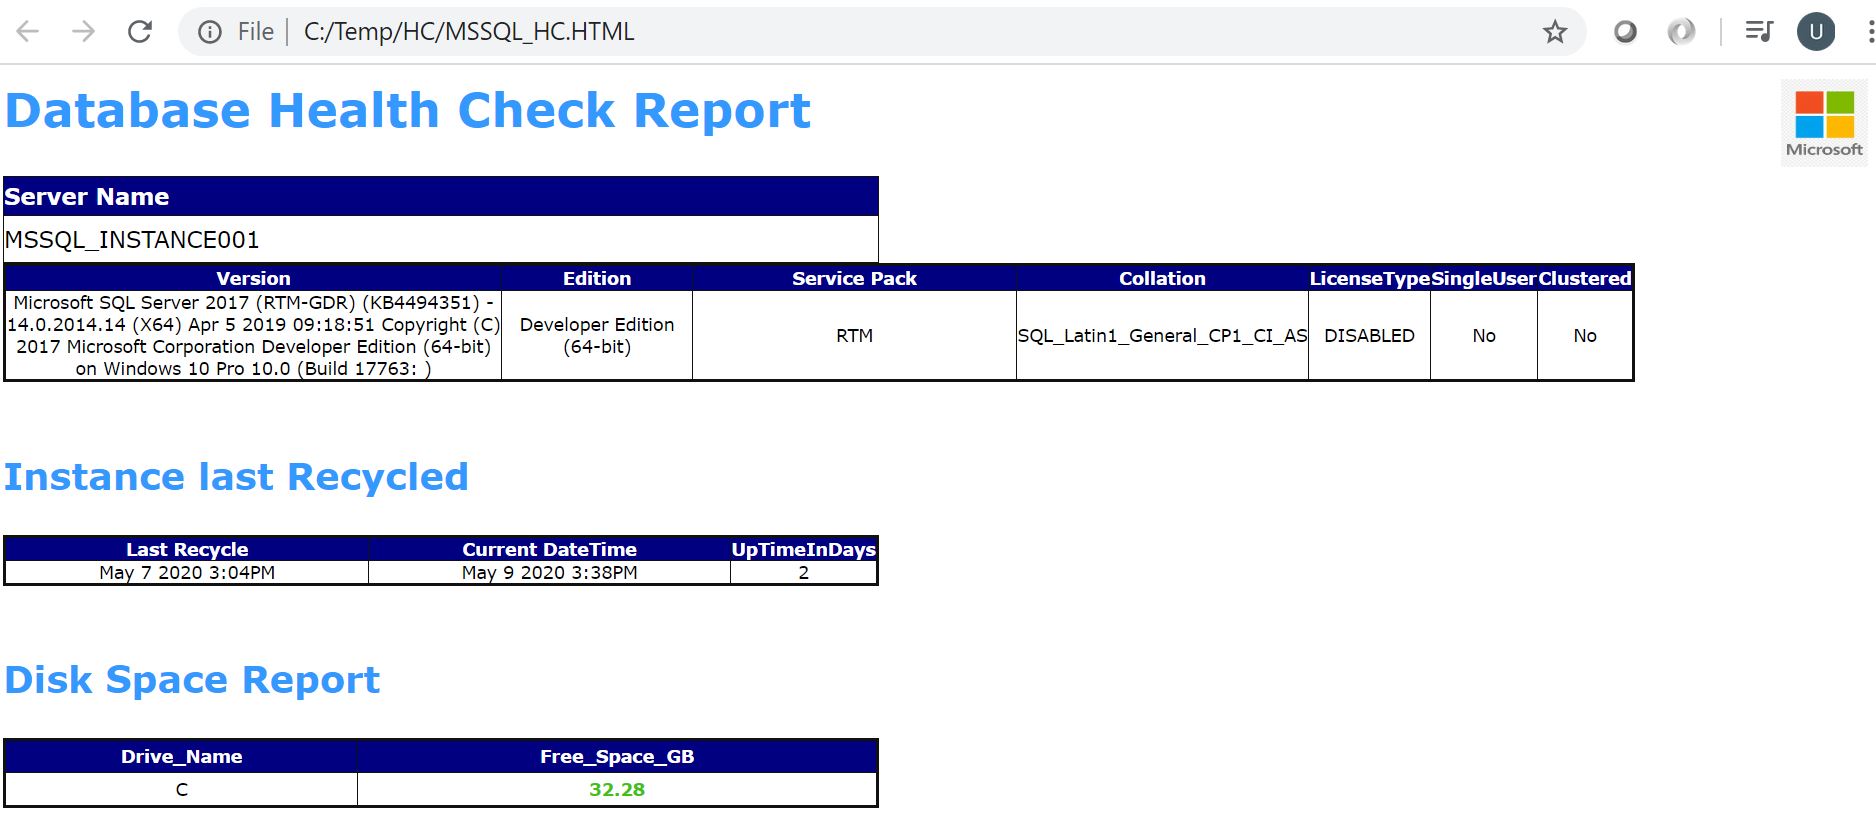 SQL Server Health Check HTML Report - udayarumilli.com Inside Sql Server Health Check Report Template